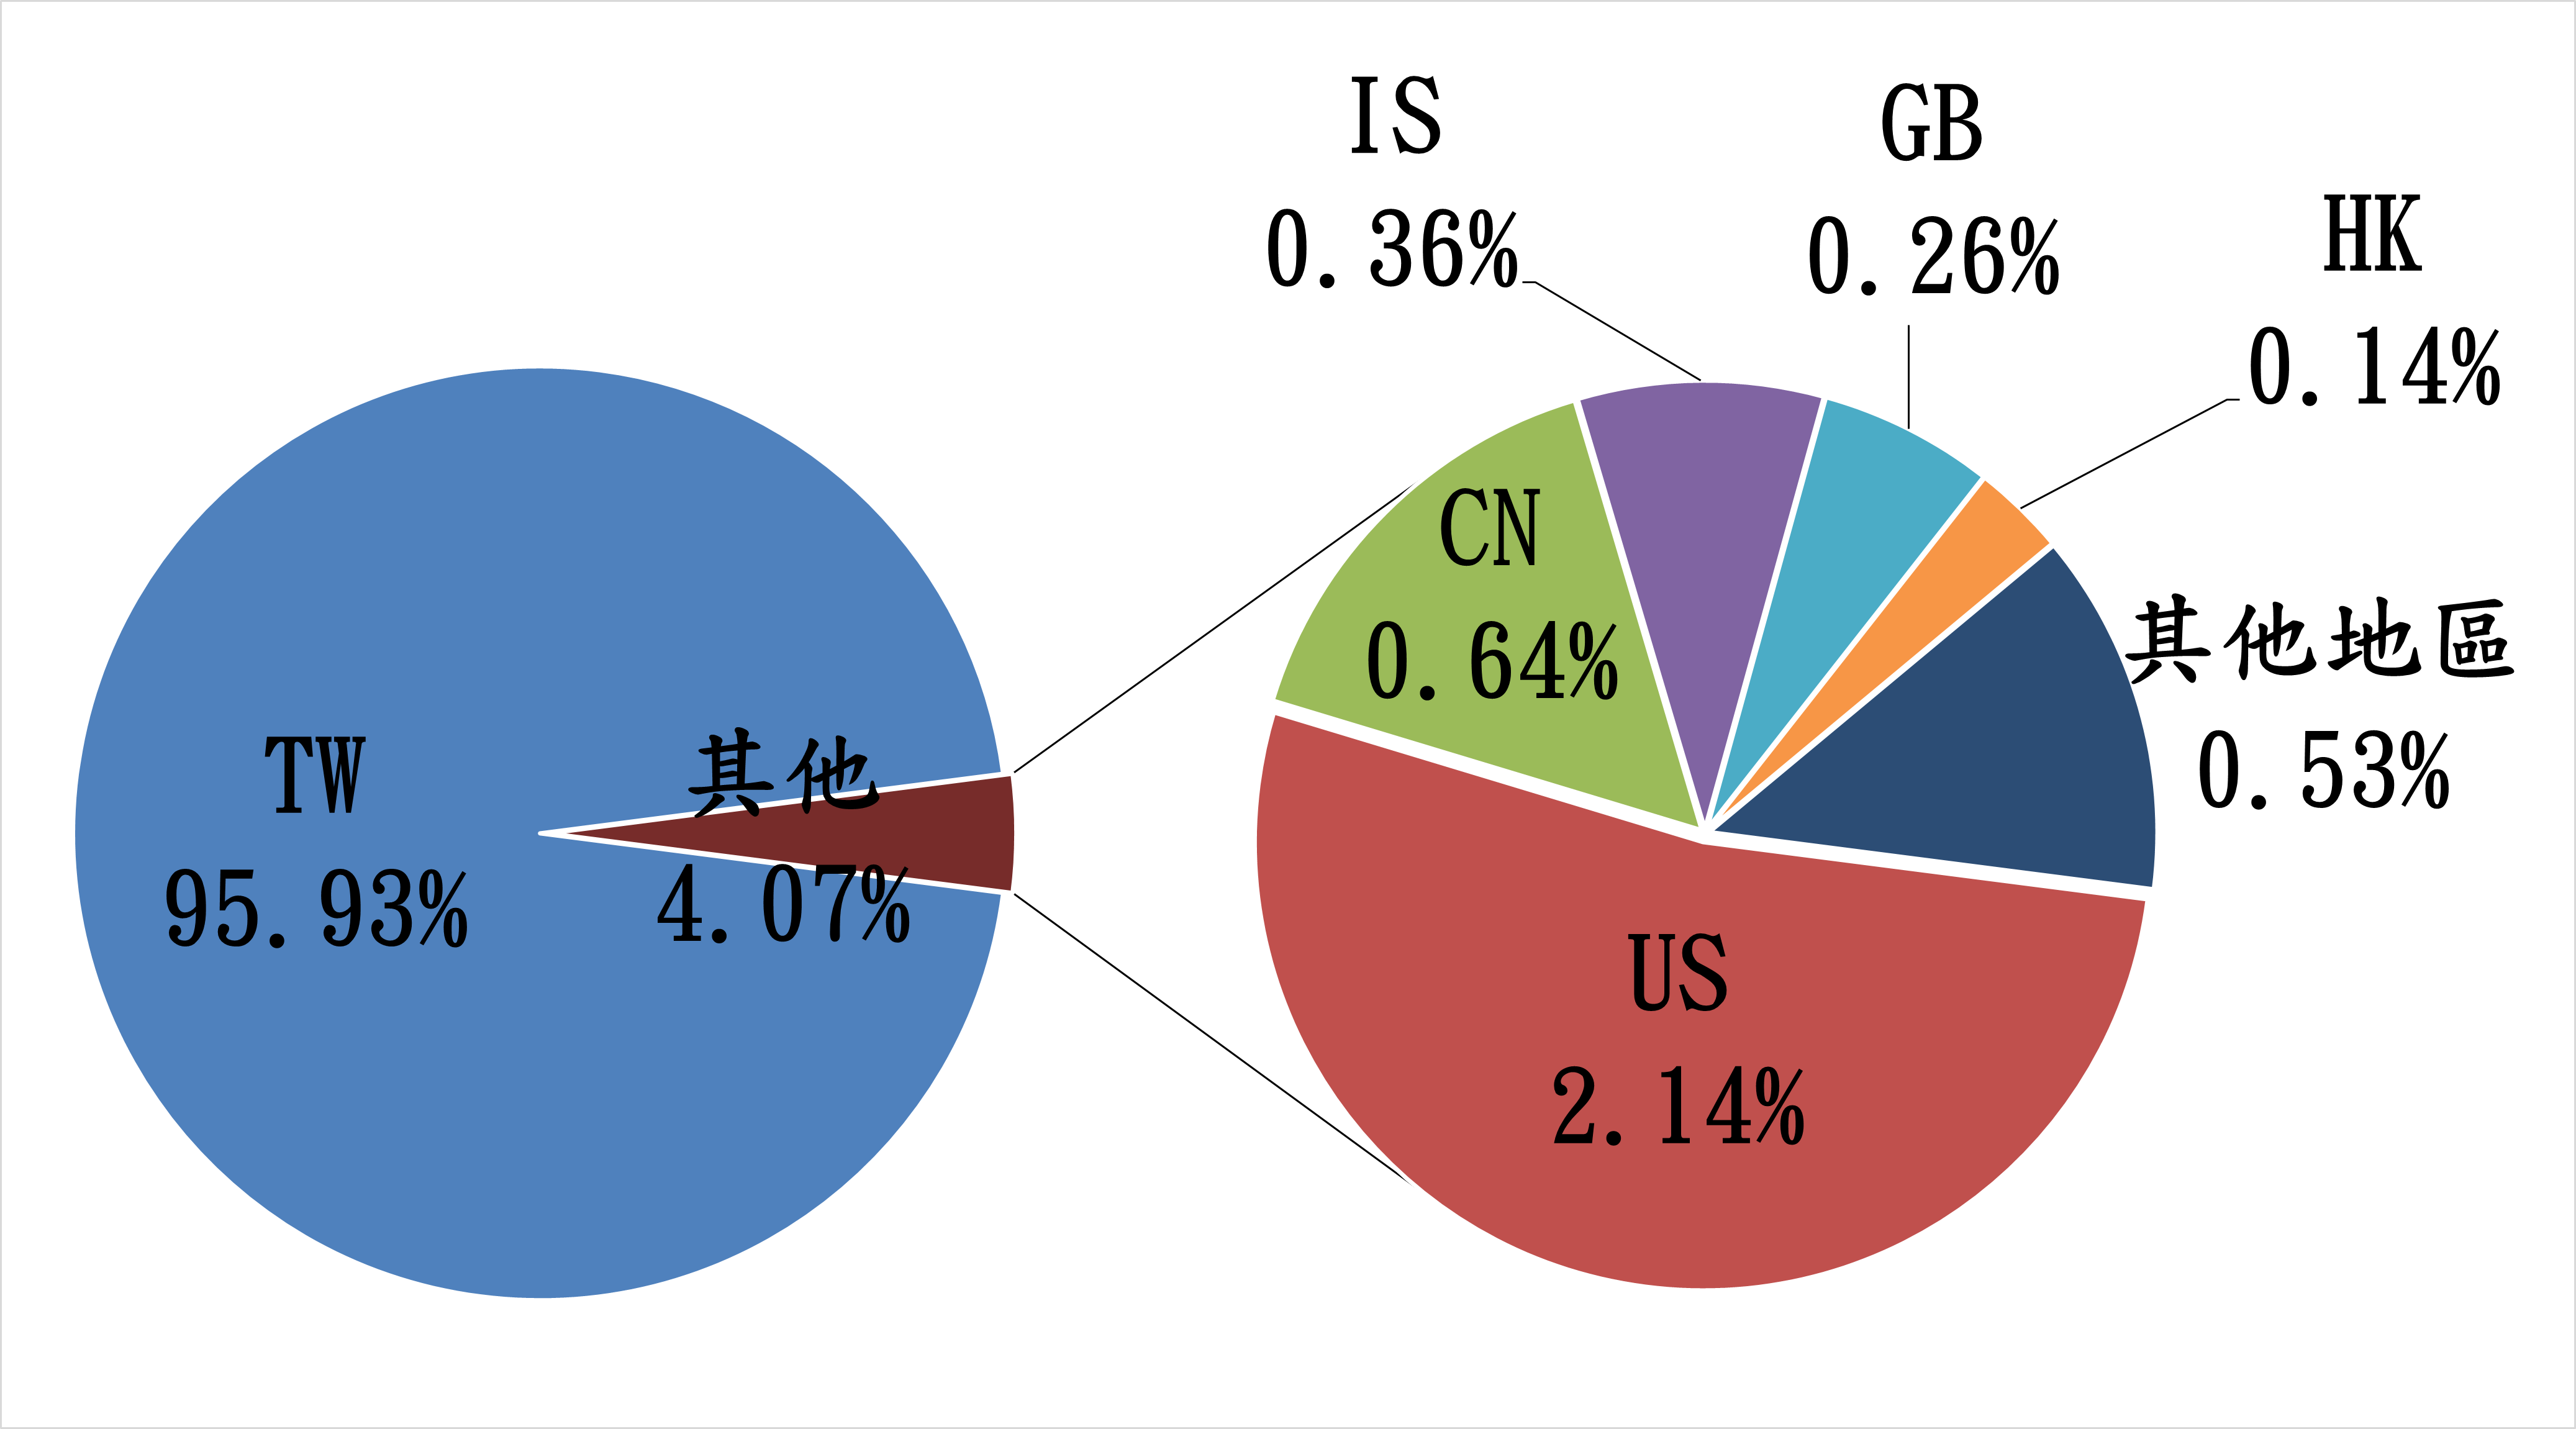 TW95.93% 其他4.07% US0.36% CN0.64% IS0.36% GB0.26% HK0.14% 其他地區0.53%